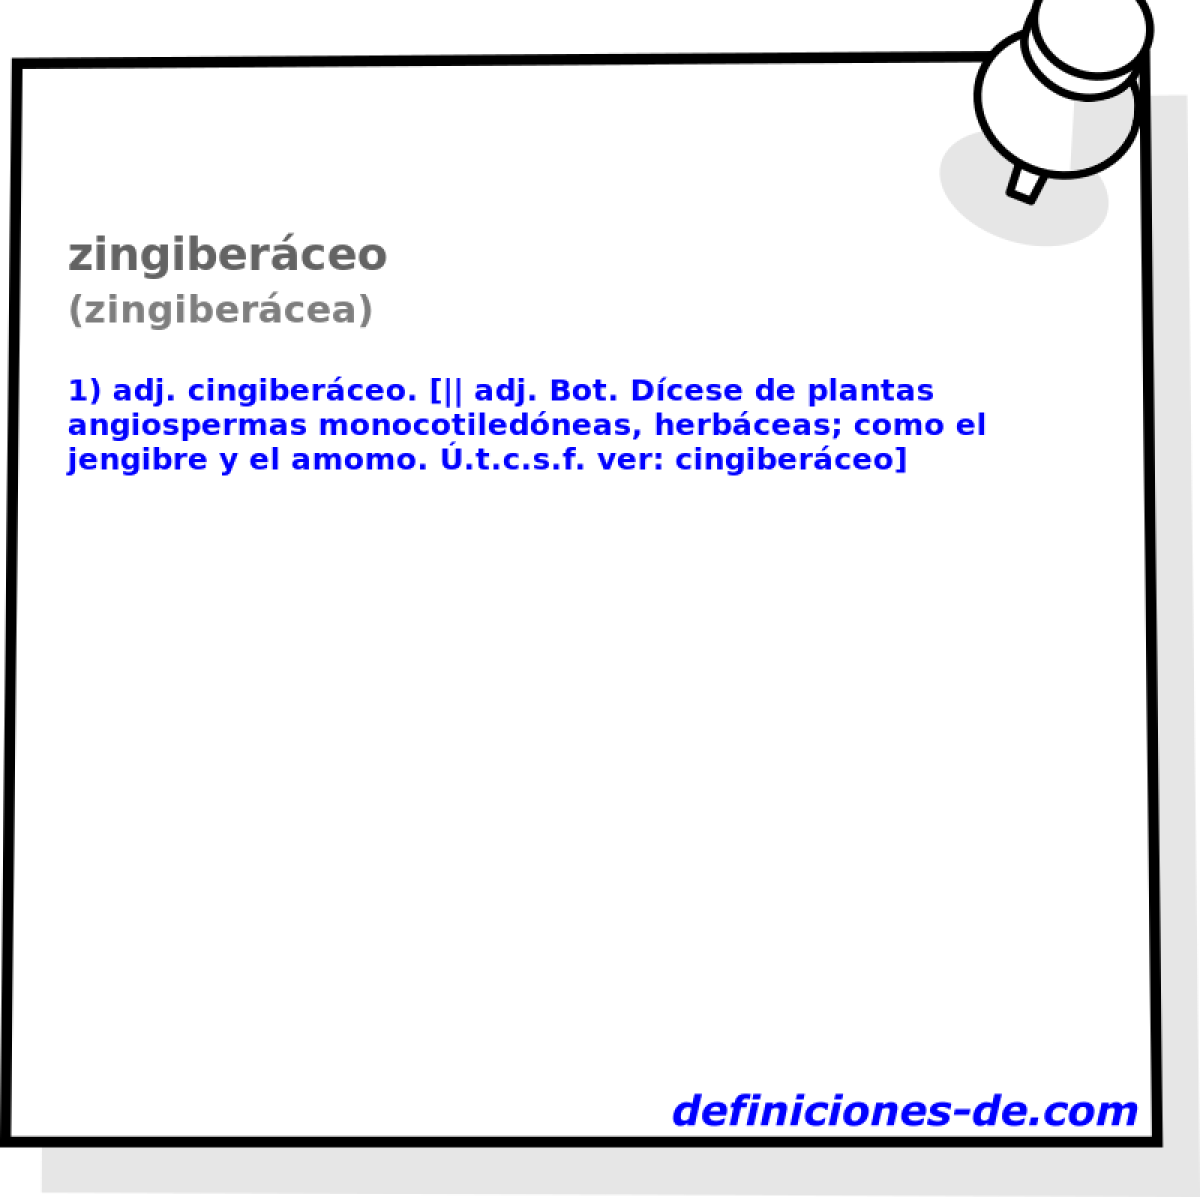 zingiberceo (zingibercea)